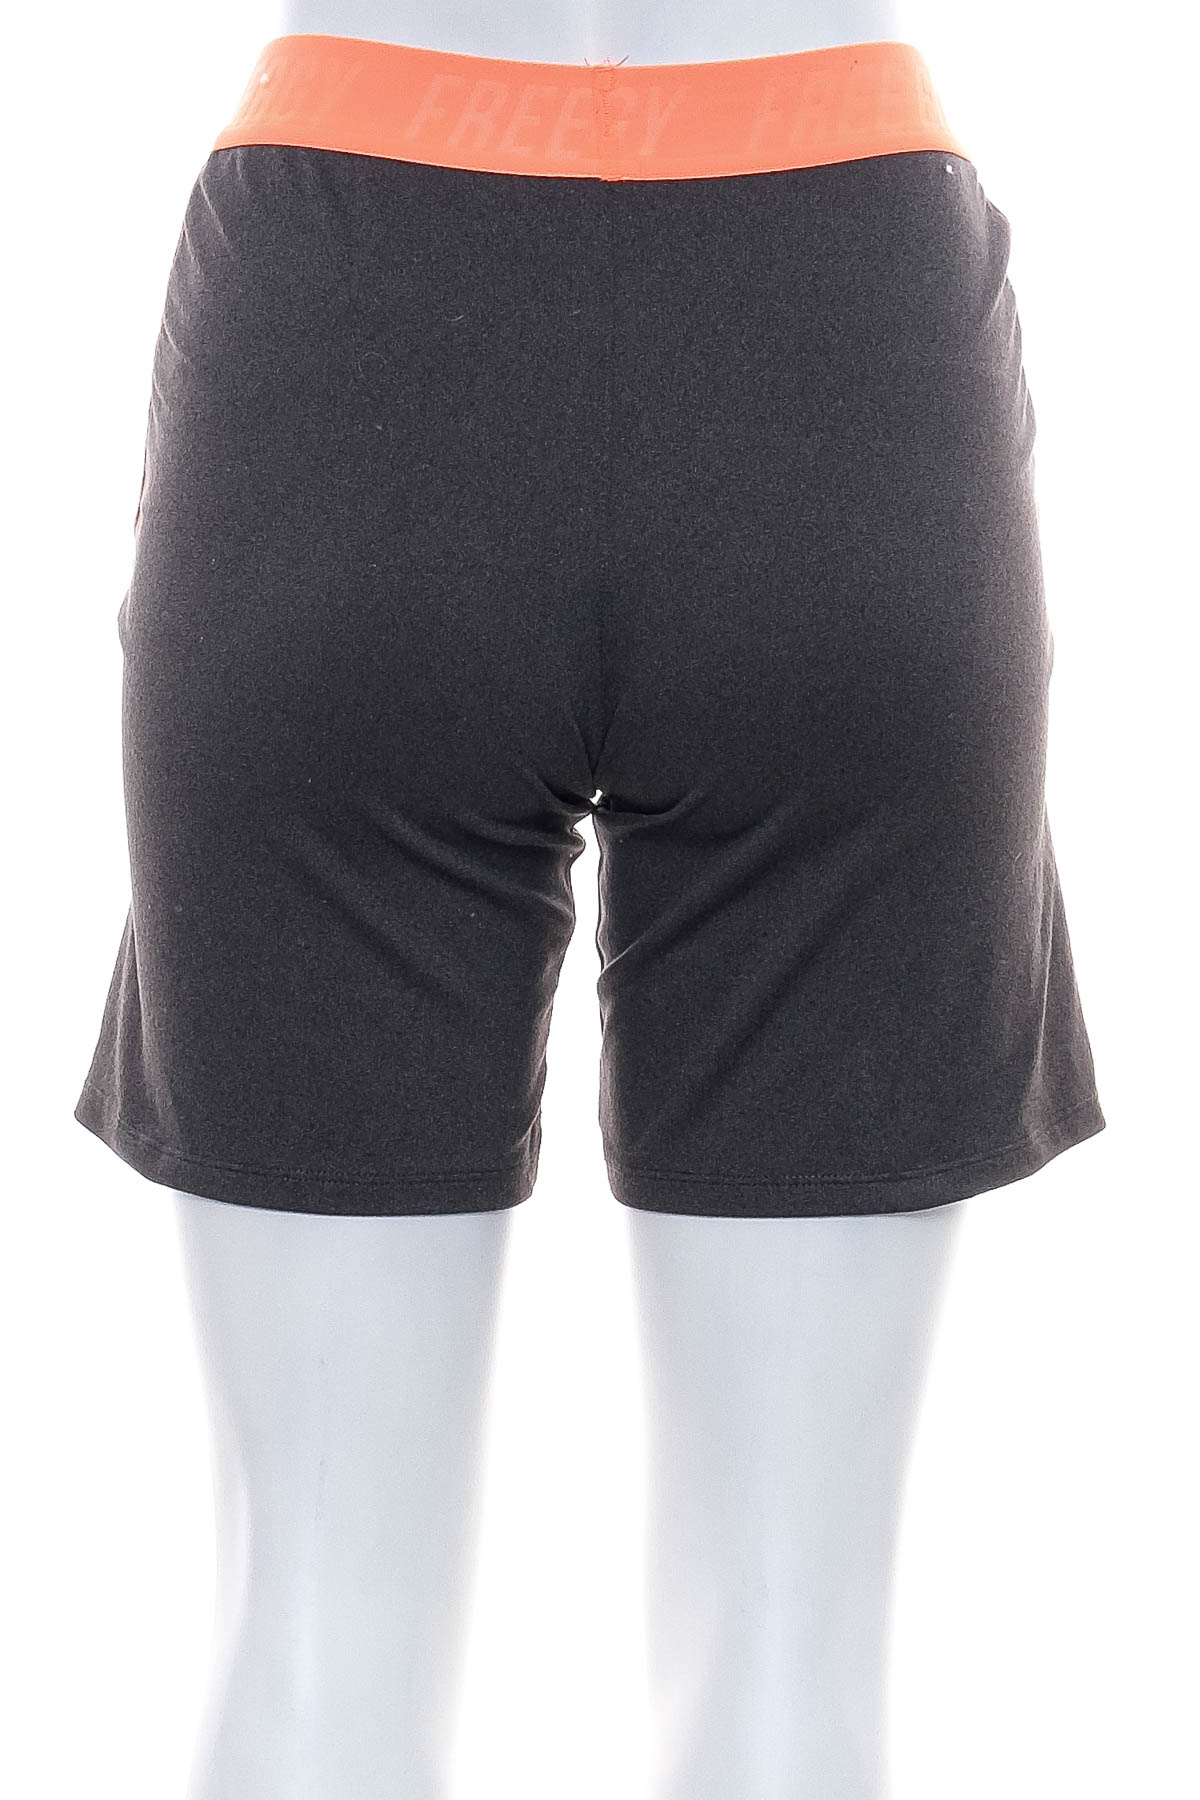 Female shorts - Domyos - 1